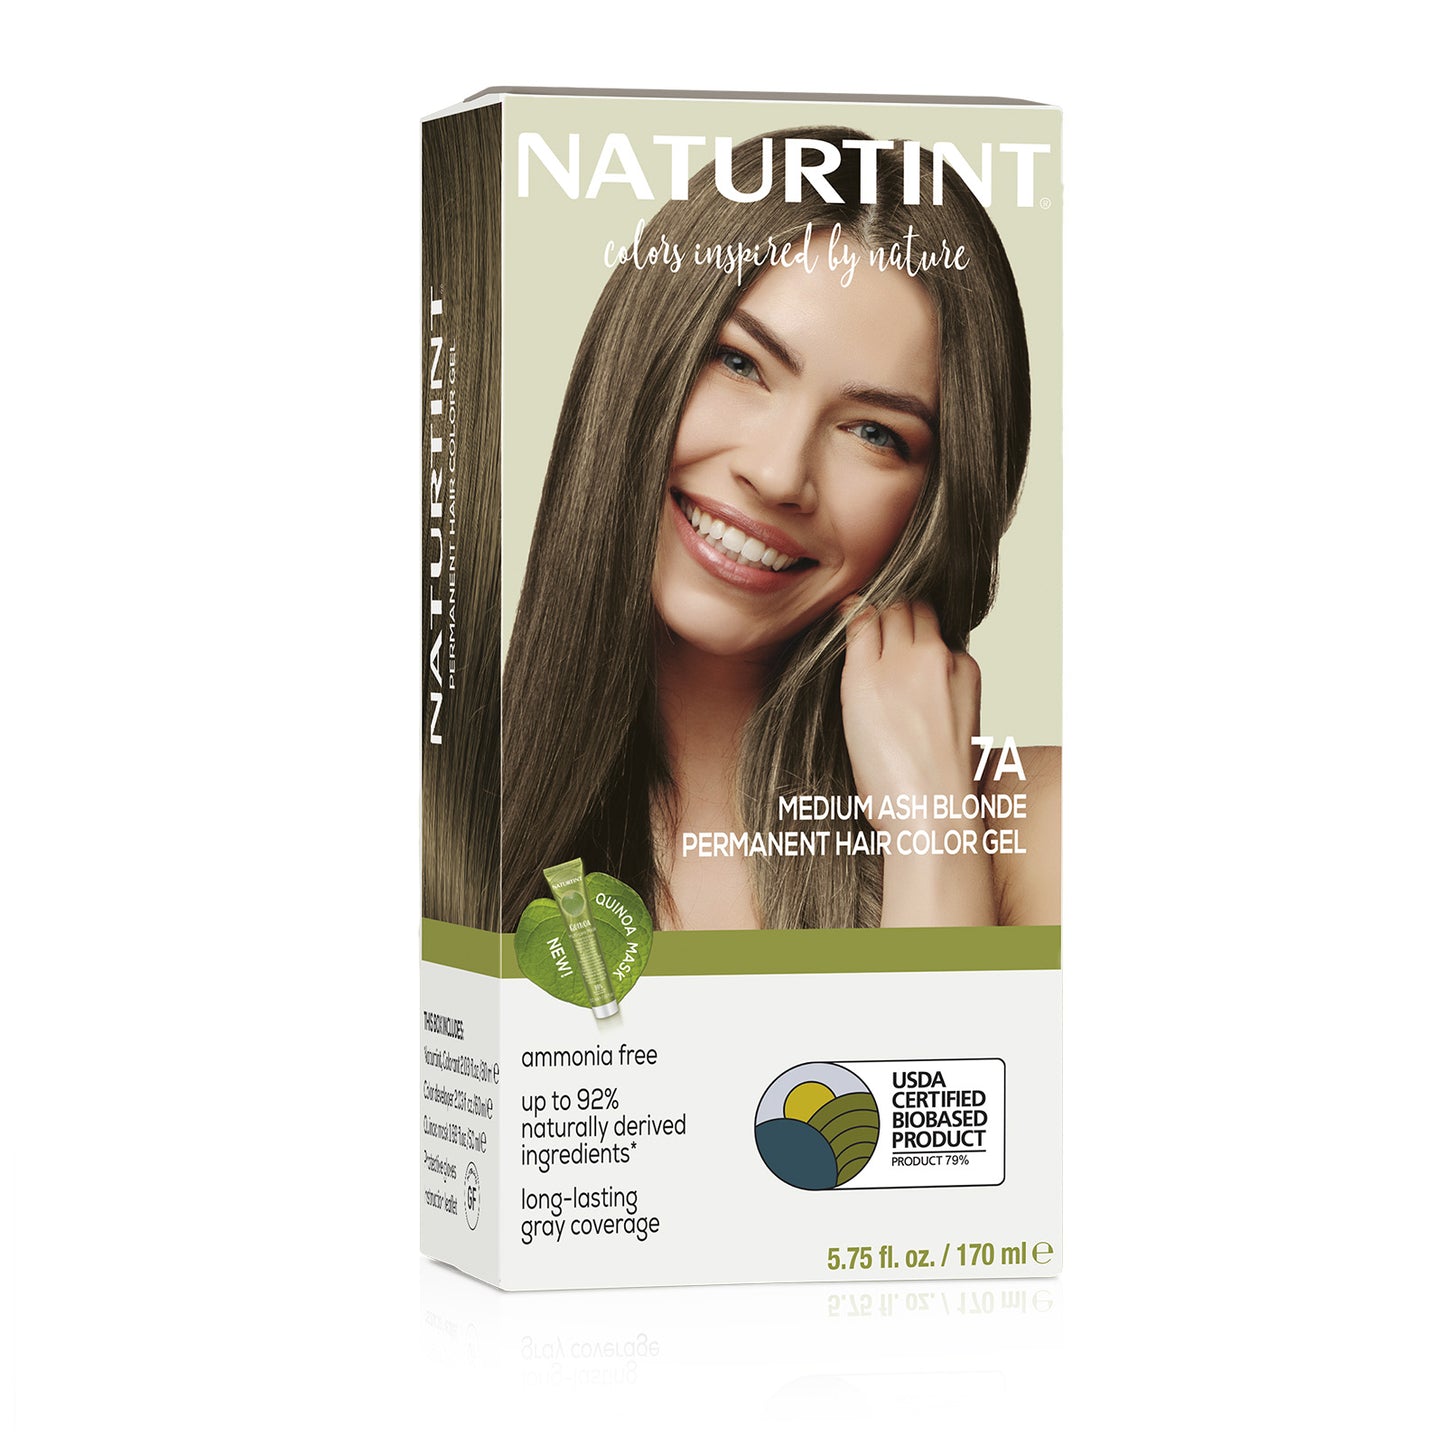 Naturtint Permanent Hair Color 7A Medium Ash Blonde